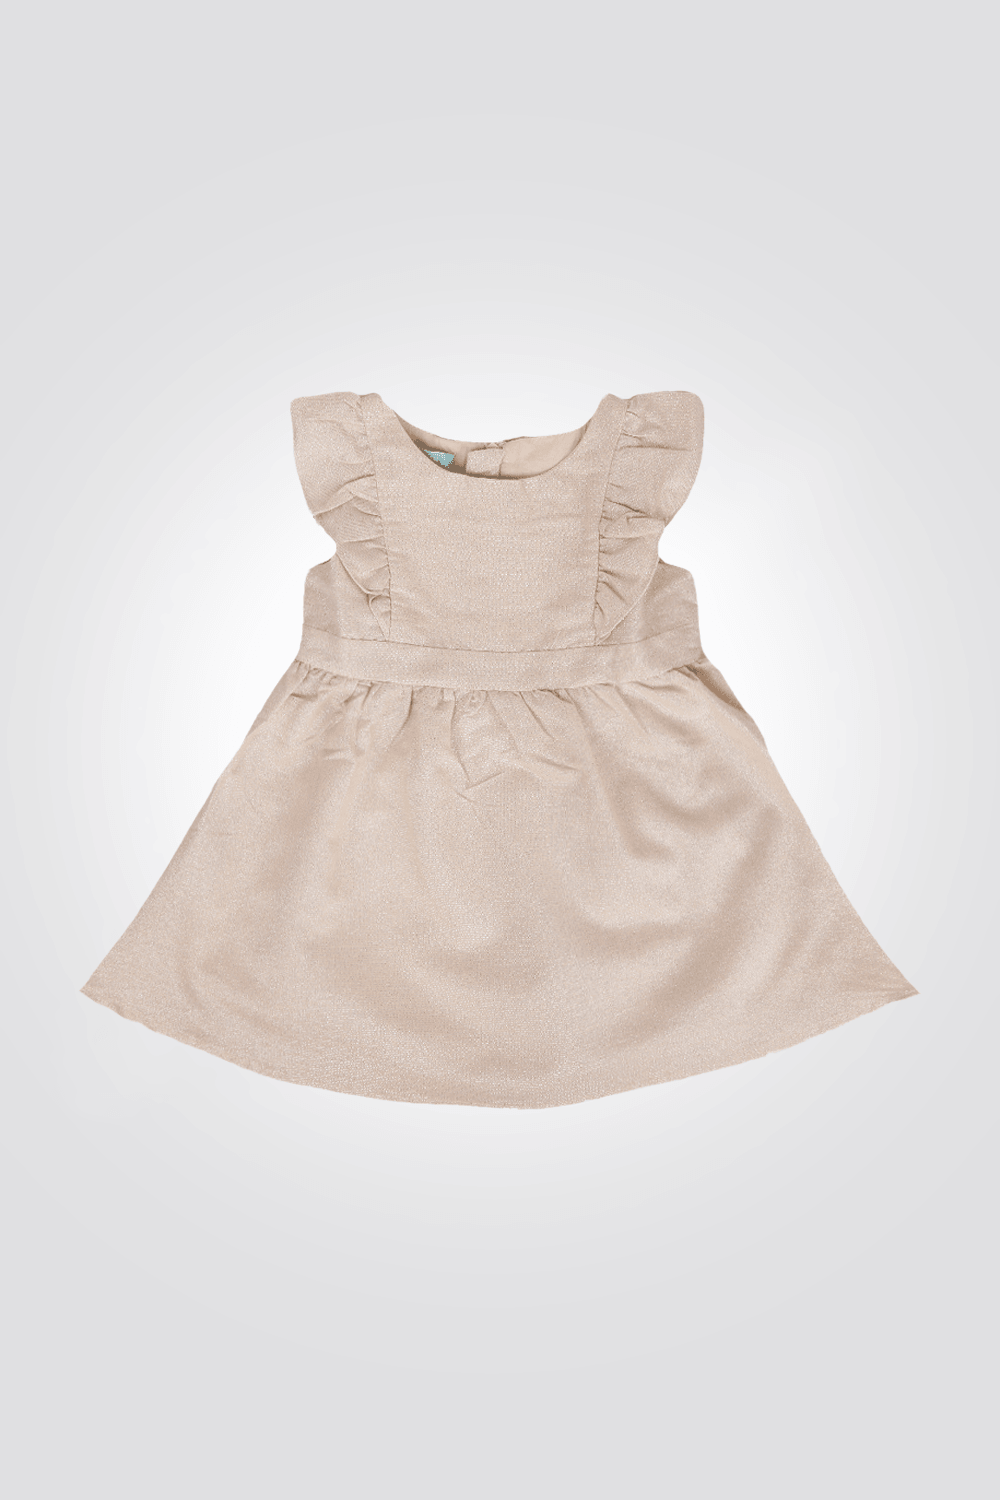 OBAIBI - שמלה מסתובבת בצבע בז' לתינוקות - MASHBIR//365